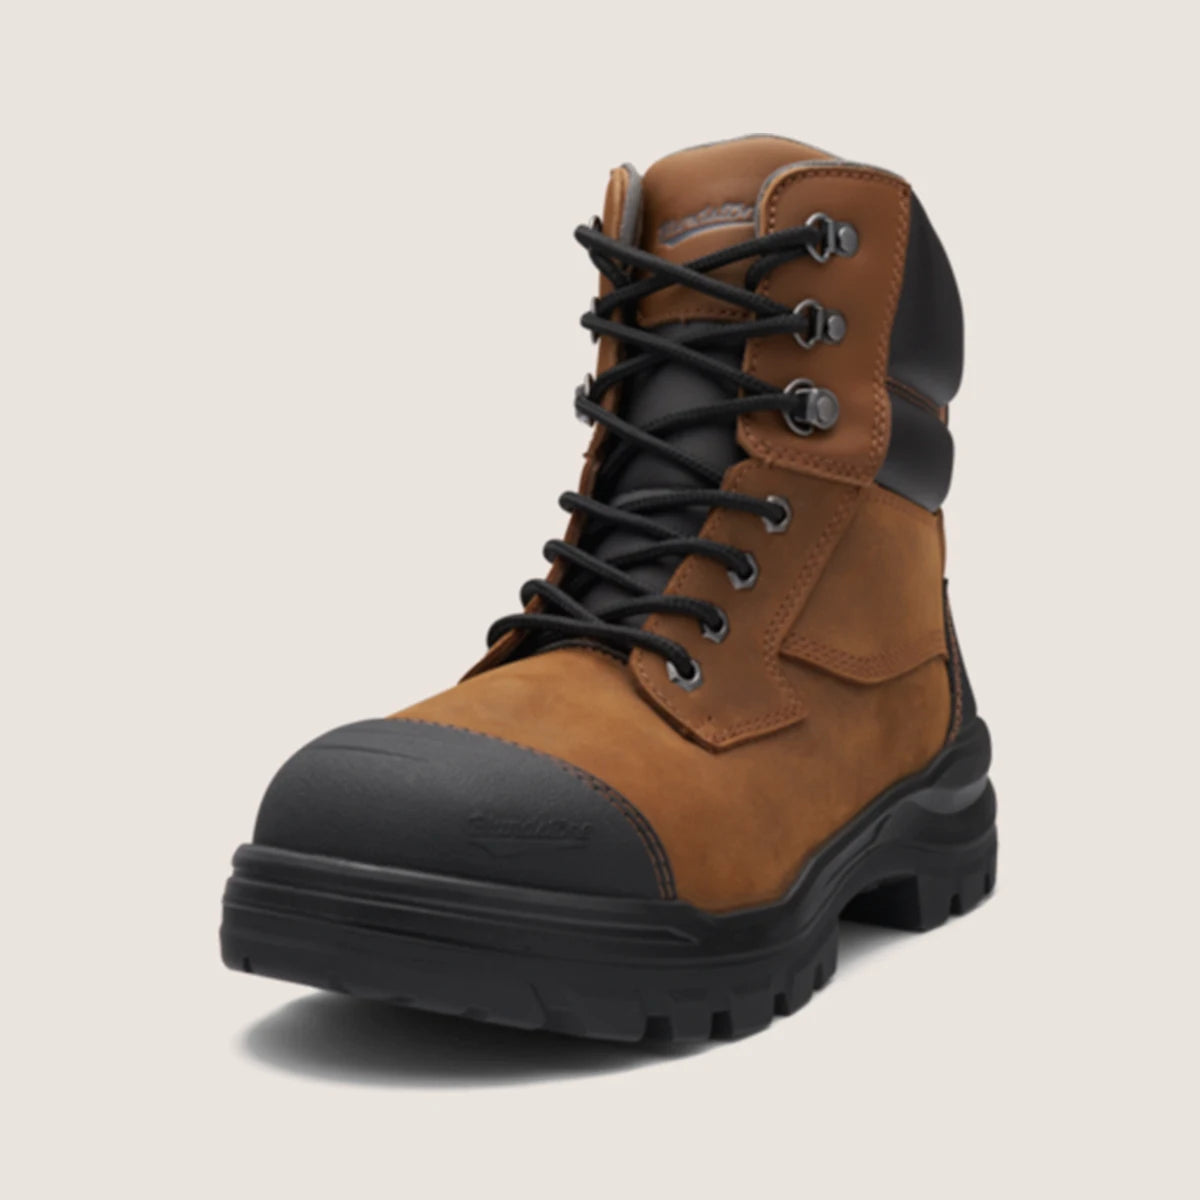 Blundstone 8066 Unisex RotoFlex Safety Boots - Saddle Brown